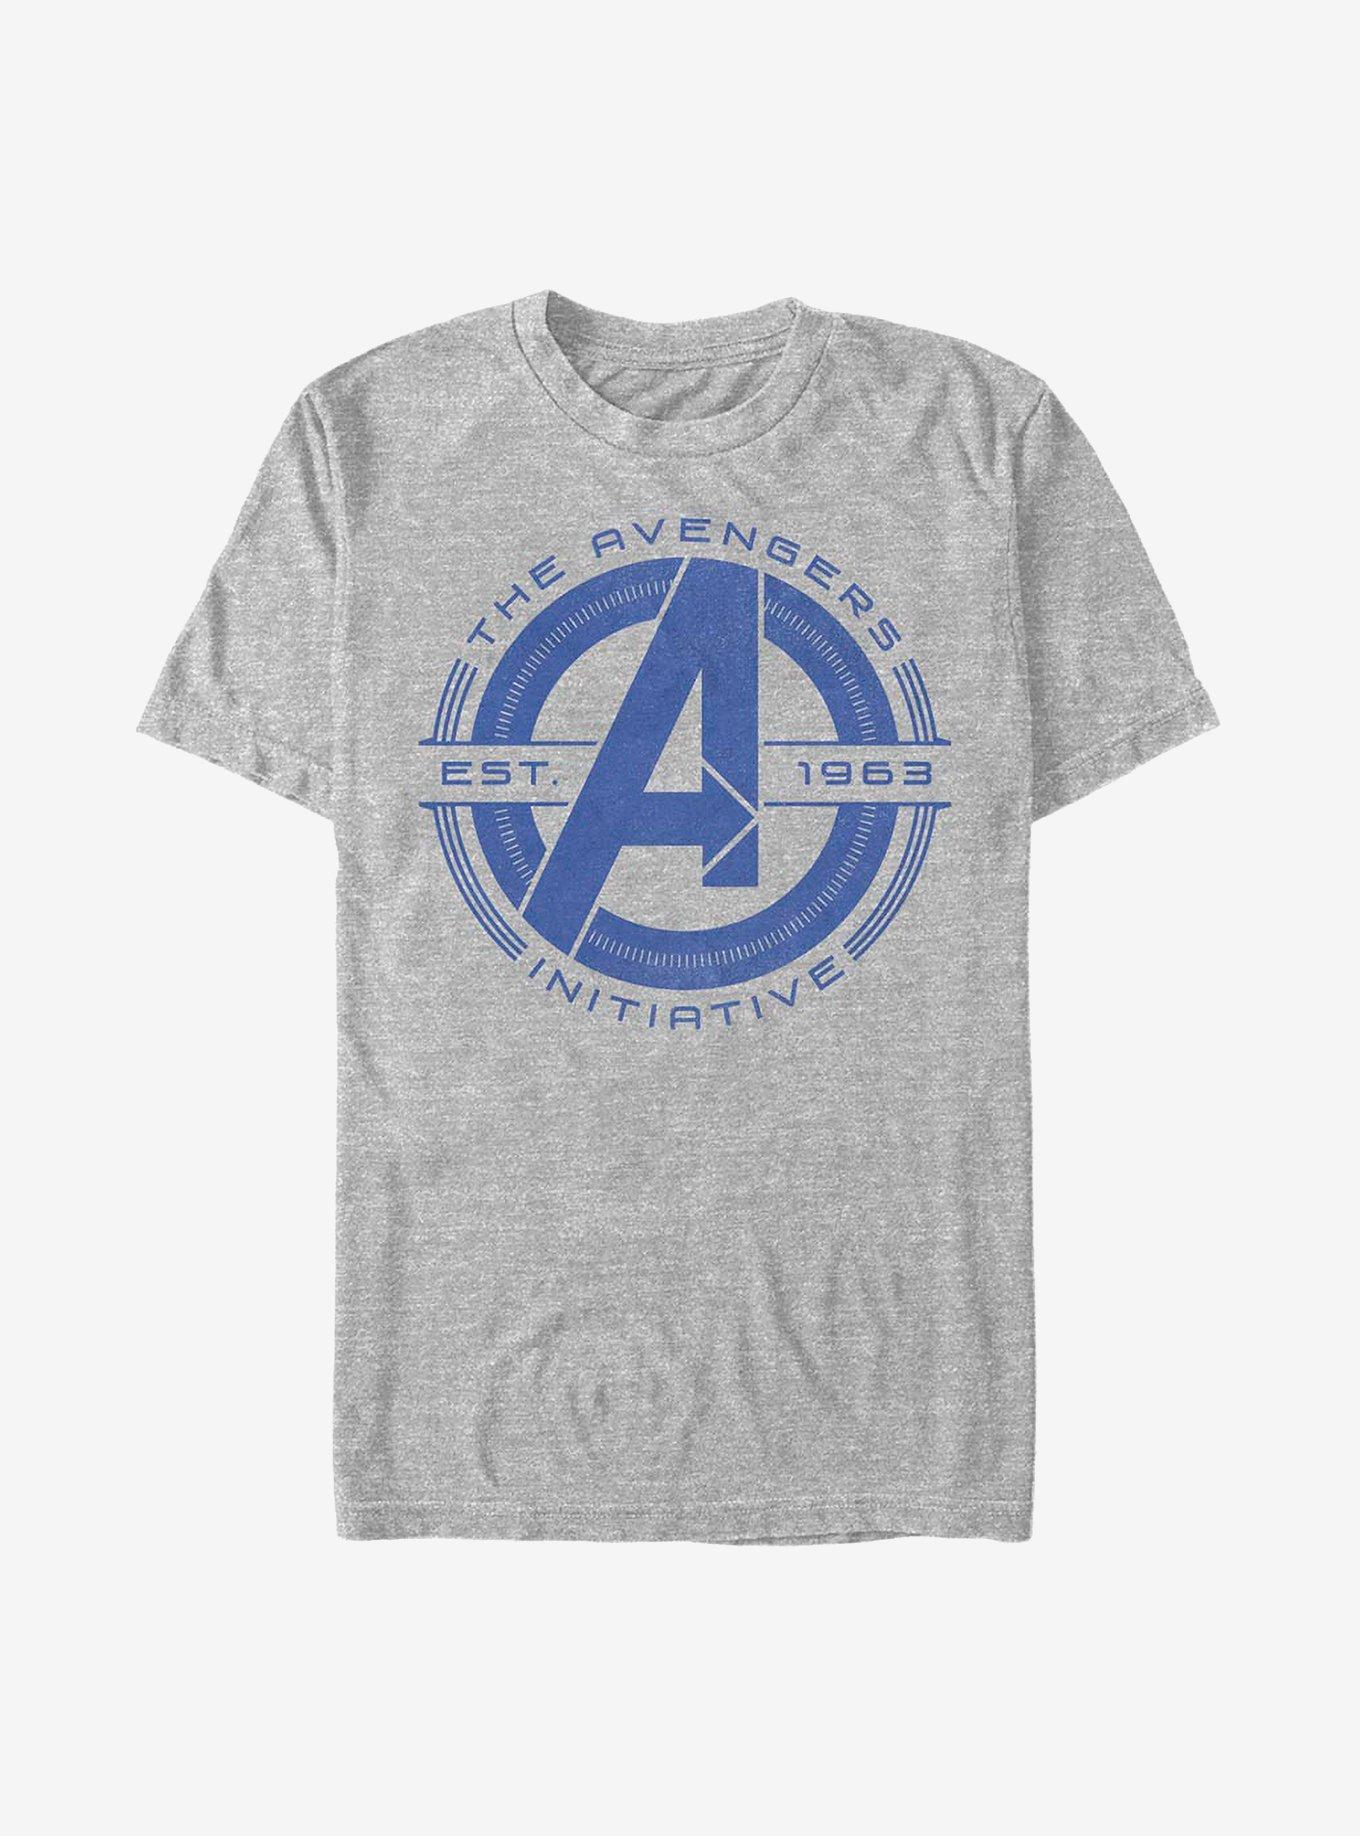 Marvel Avengers Initiative T-Shirt